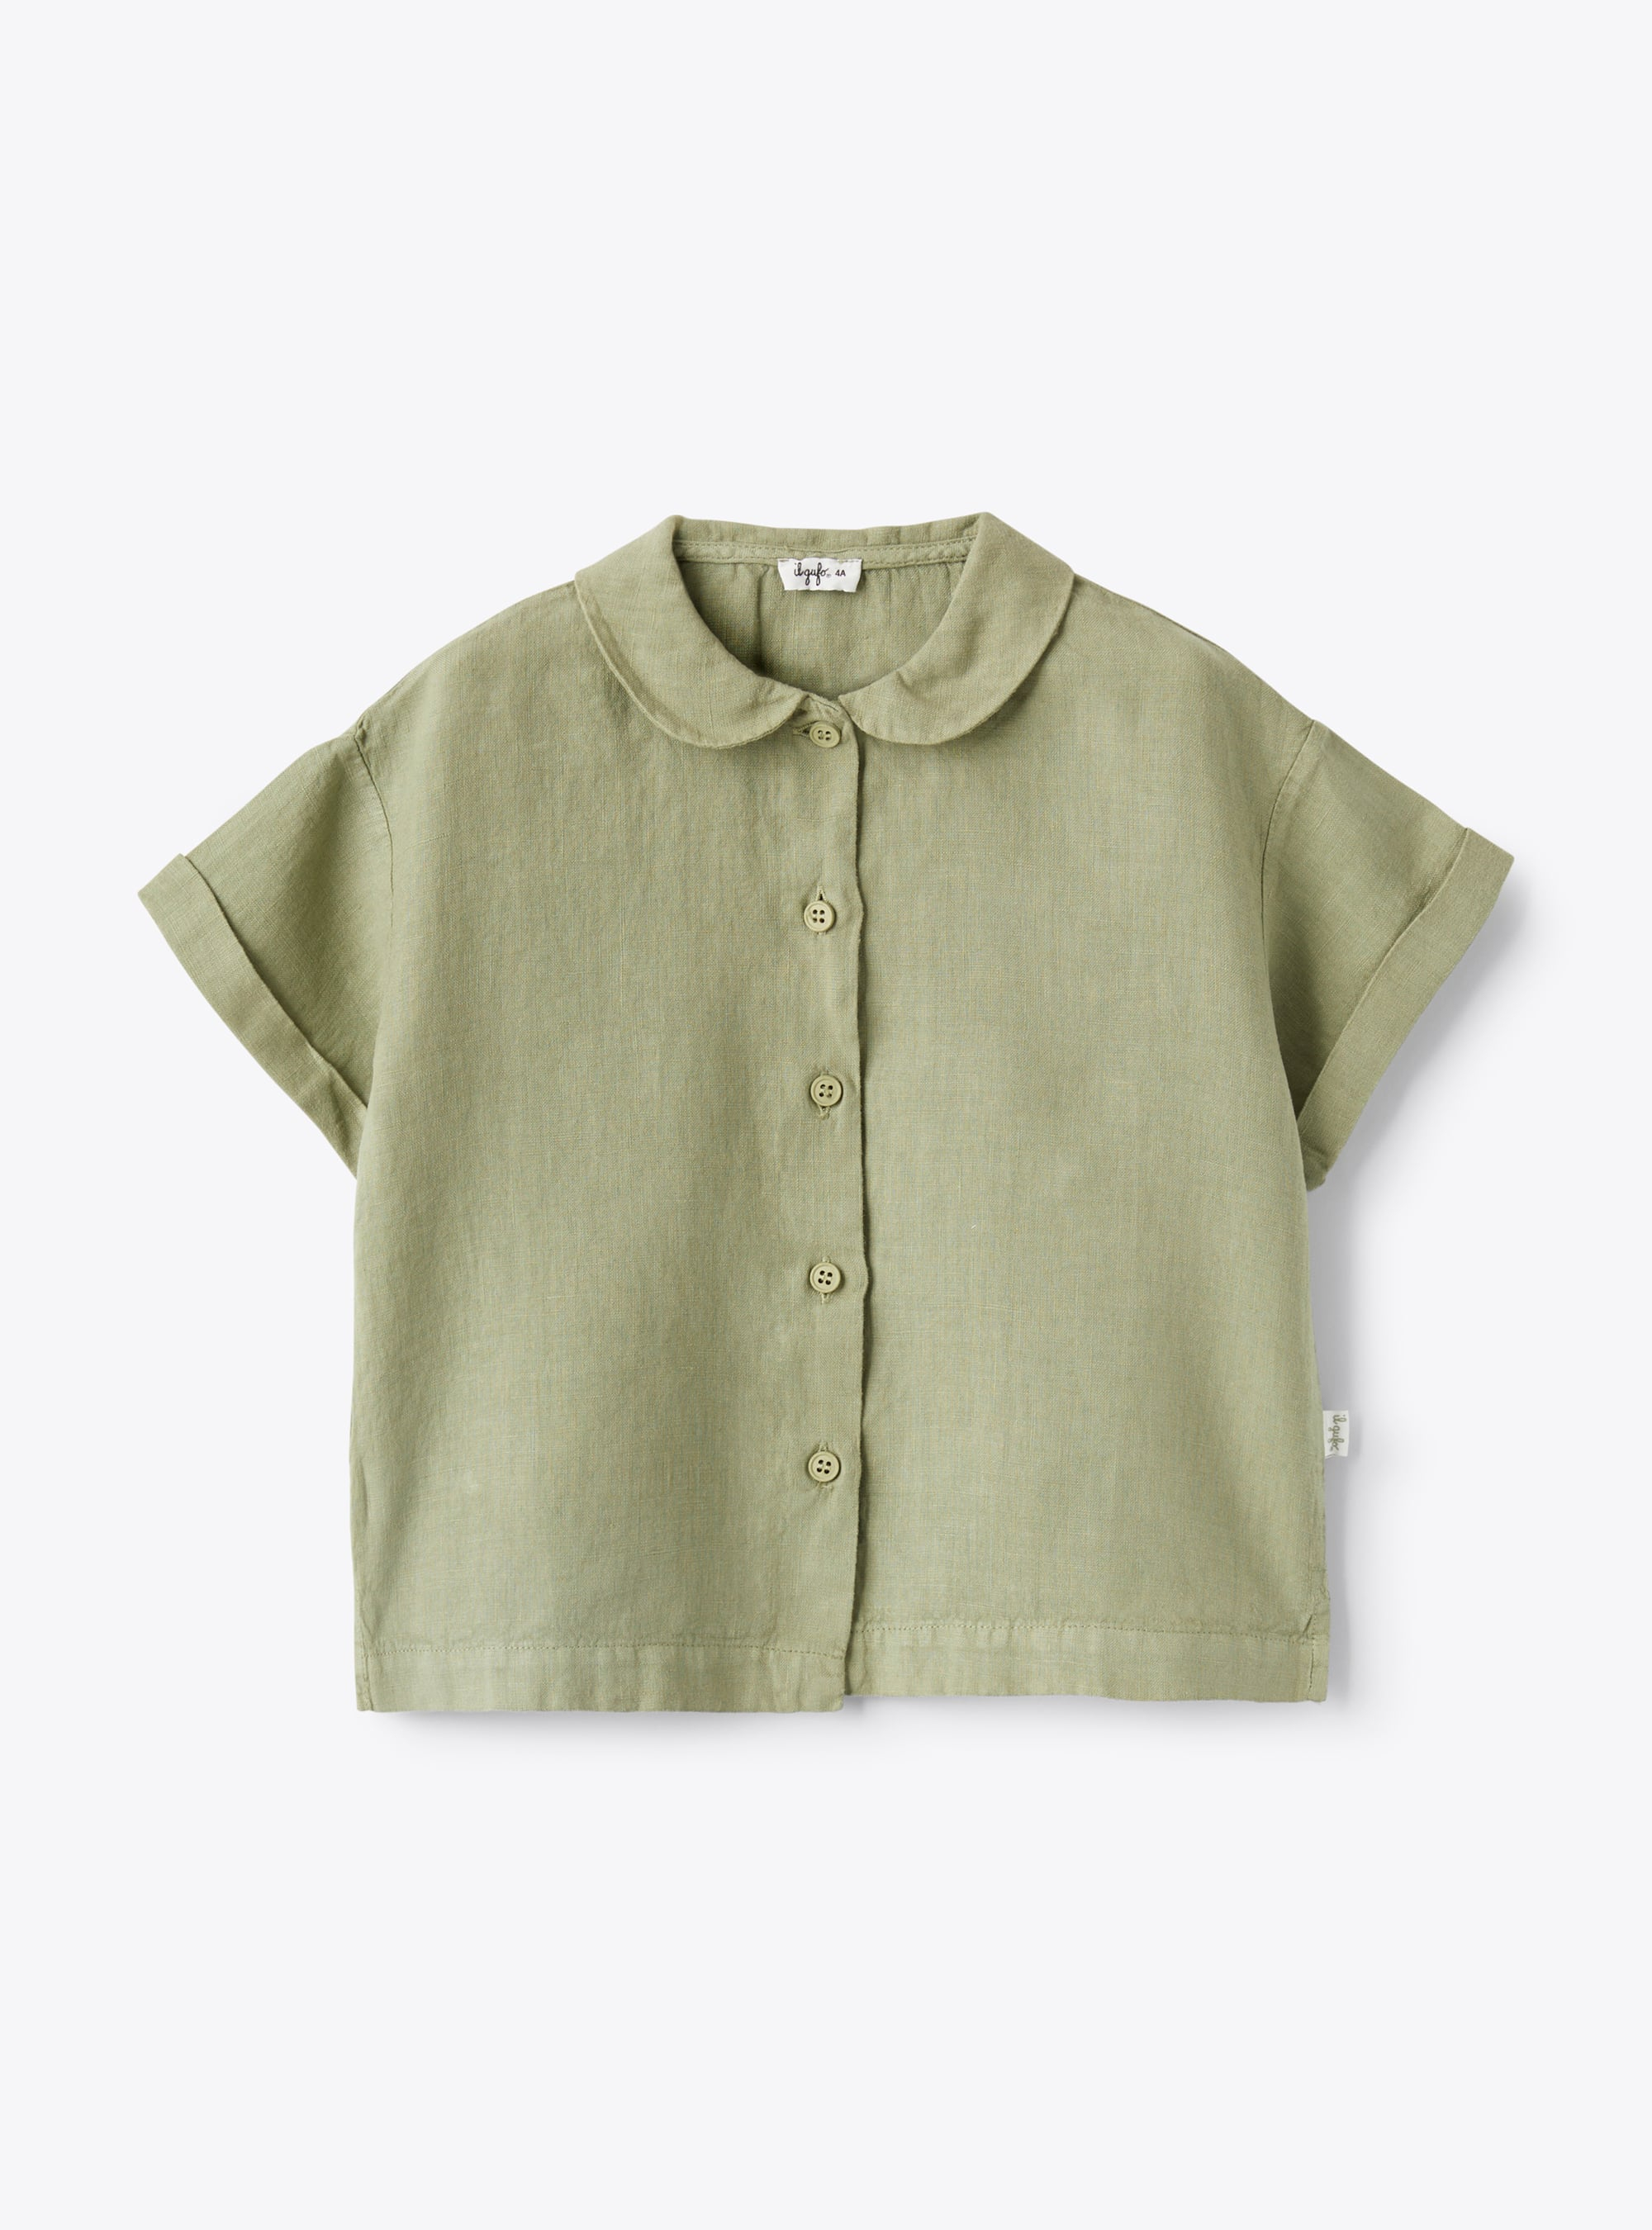 Shirt in sage-green garment-dyed linen - Green | Il Gufo